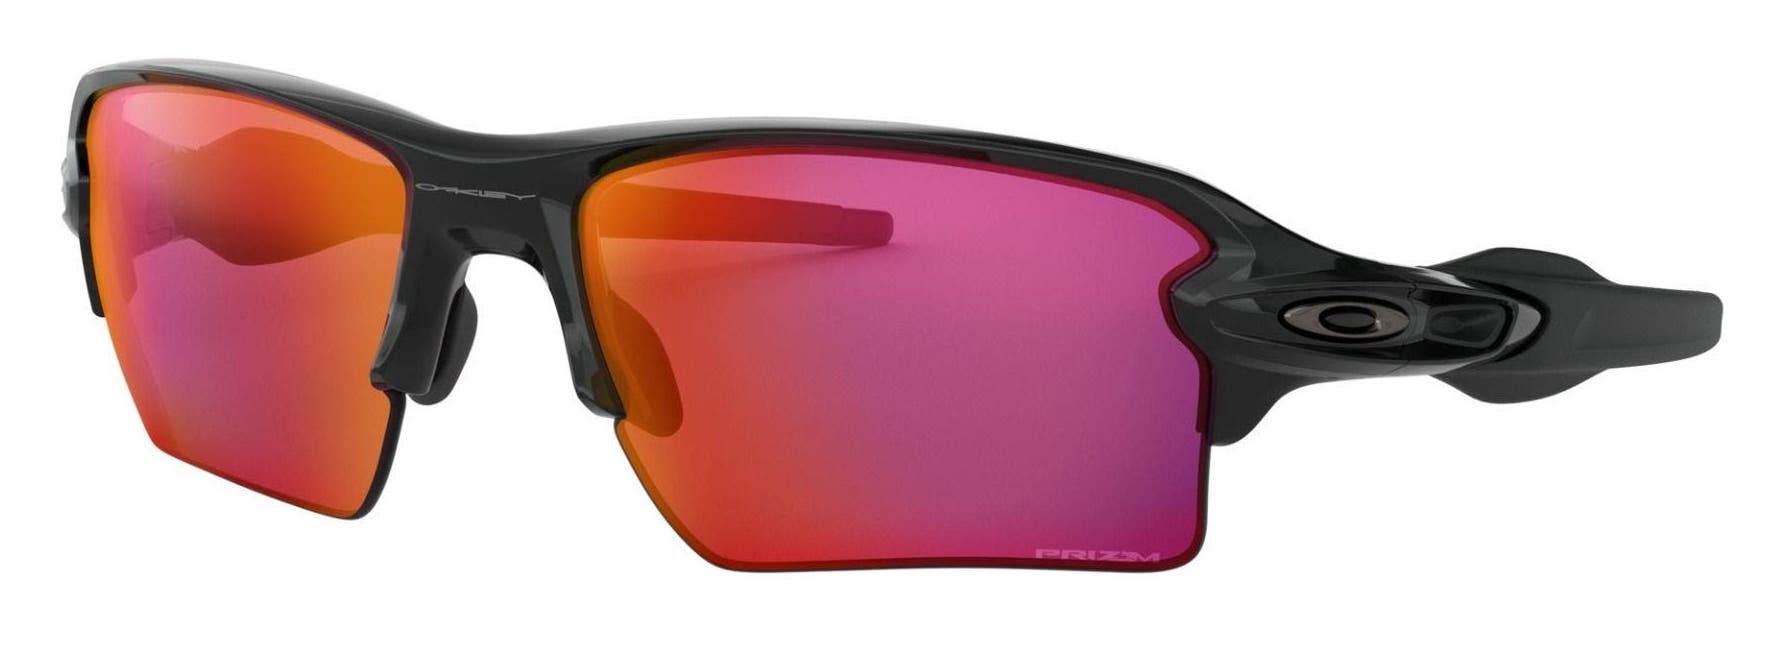 Oakley Flak 2.0 XL softball sunglasses in black with PRIZM™ Field rose copper lenses.